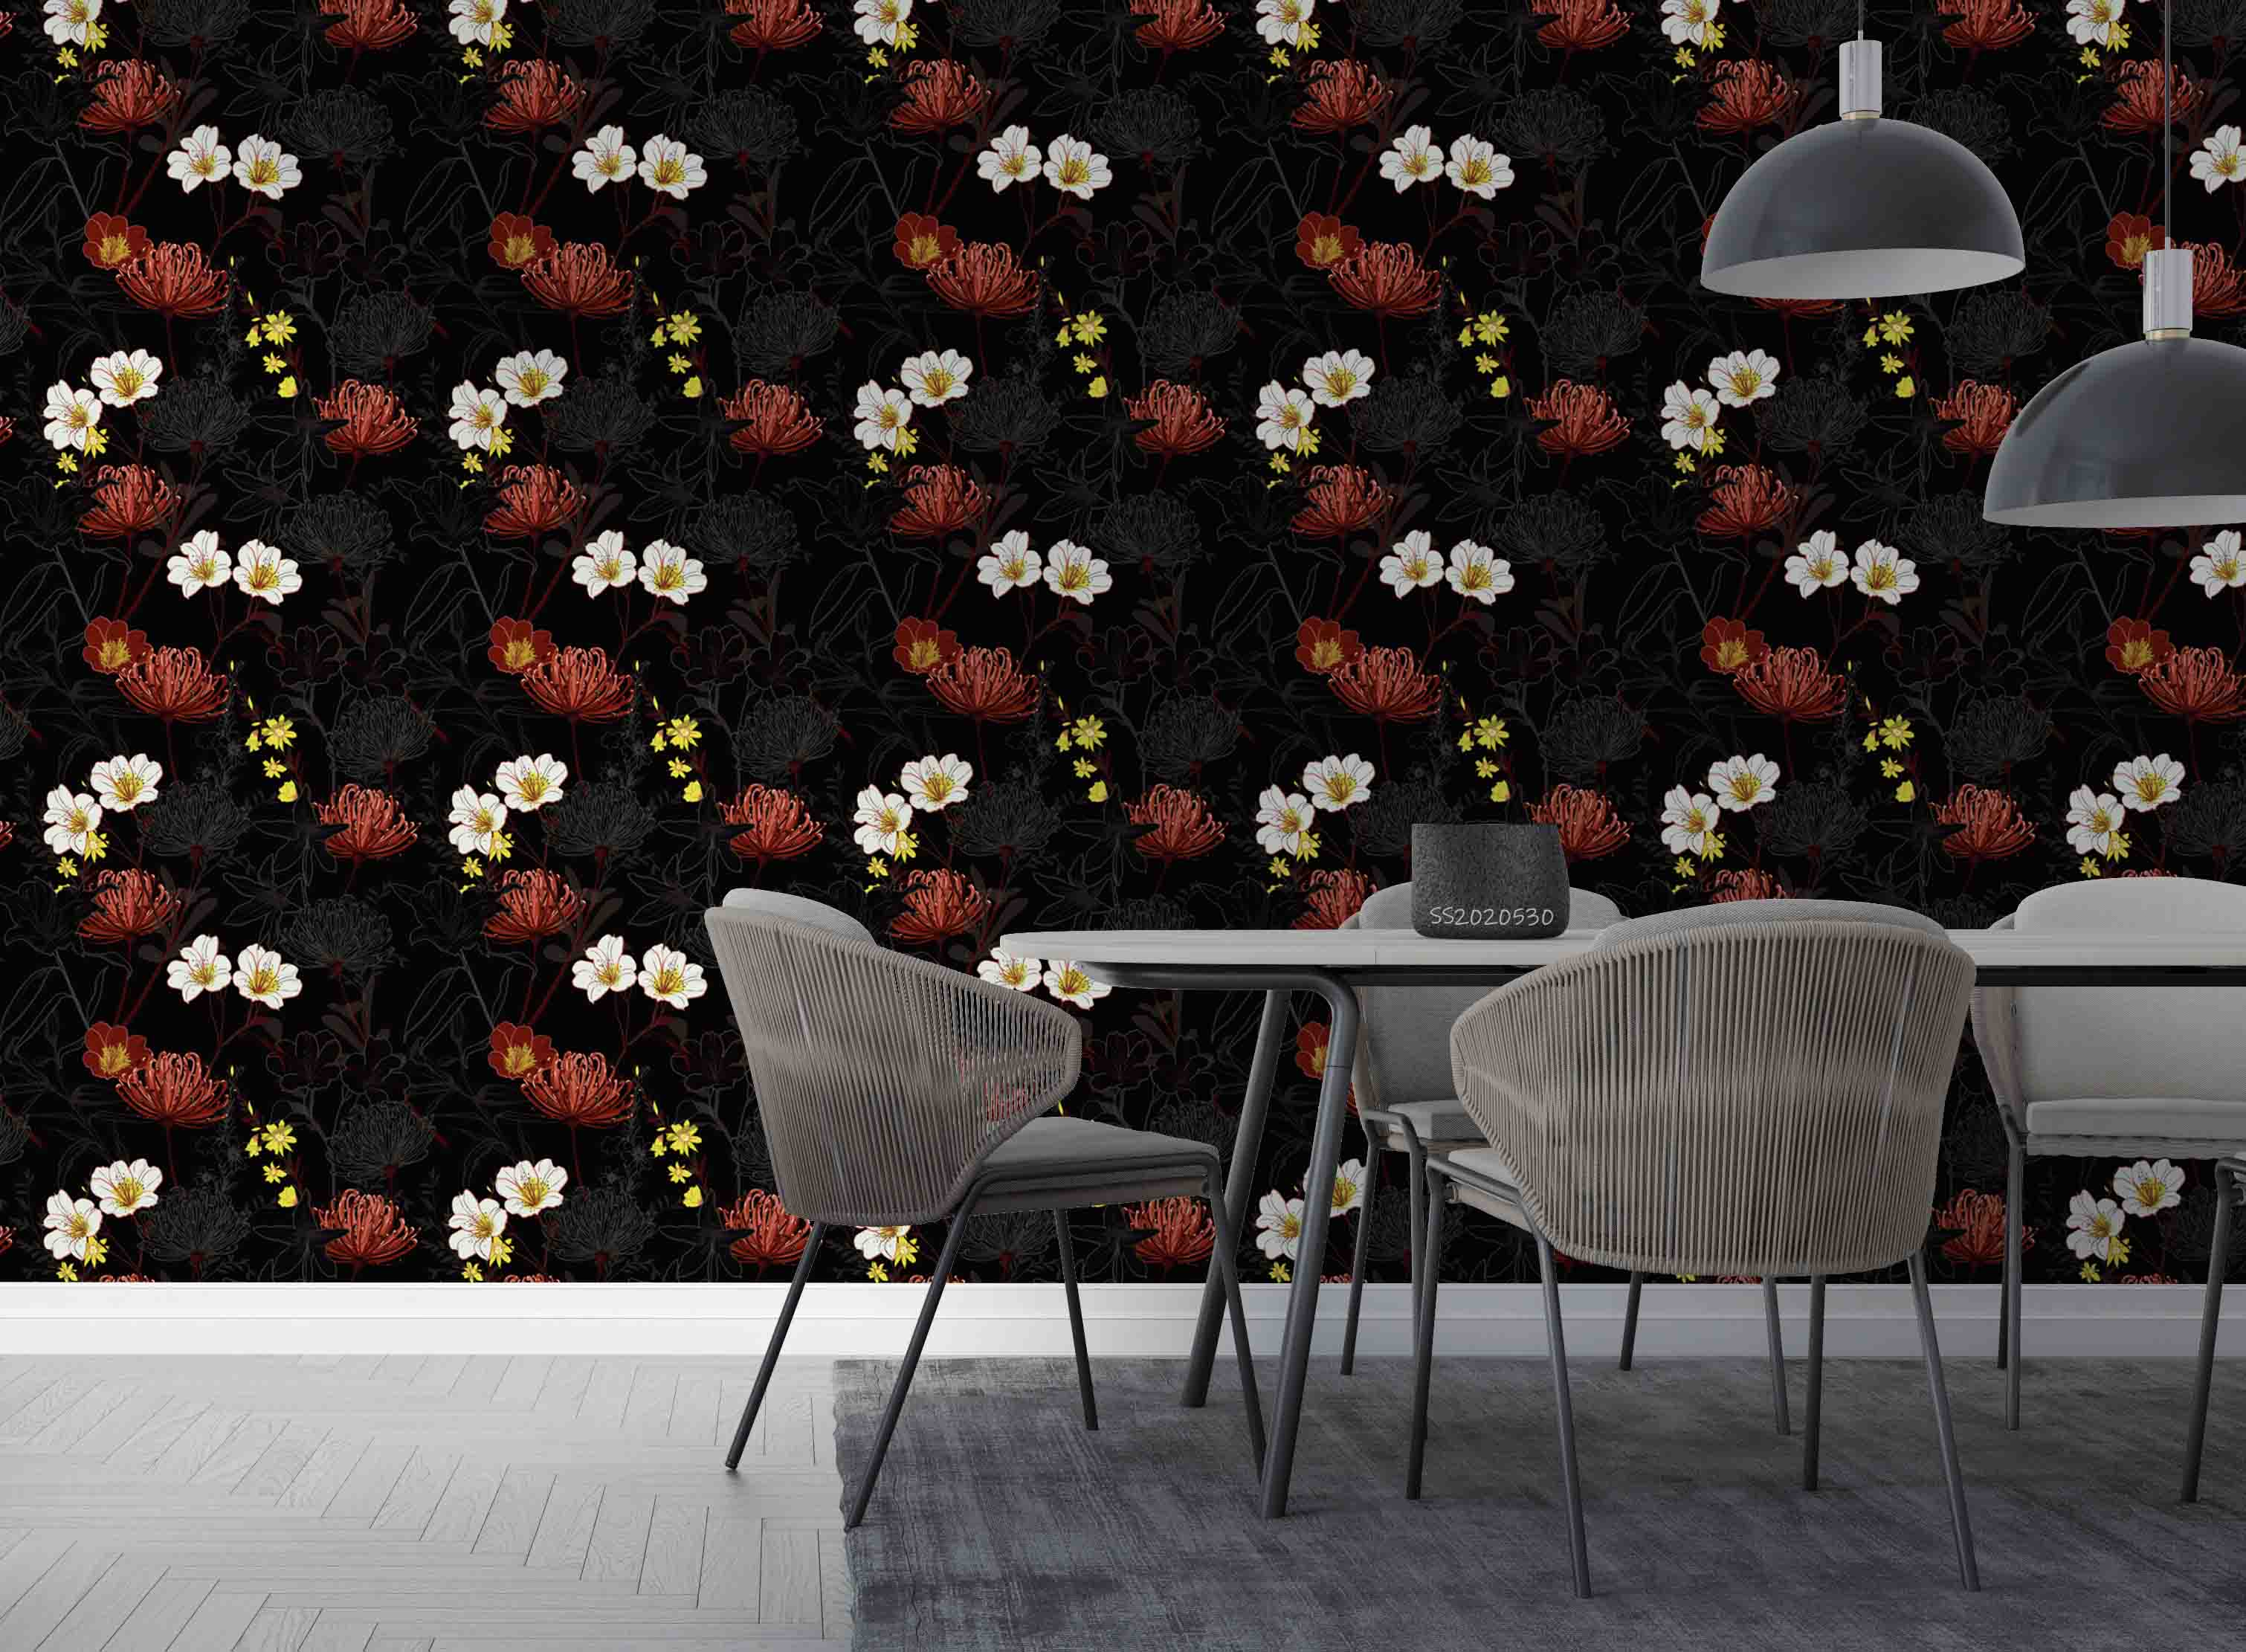 3D Vintage Floral Black Background Wall Mural Wallpaper GD 73- Jess Art Decoration